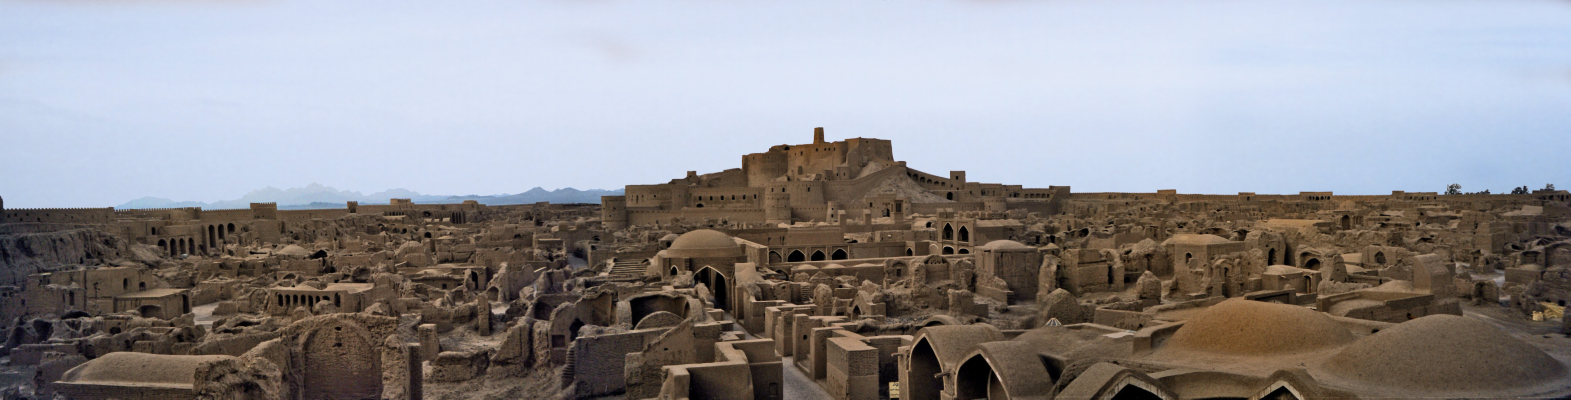 Бам — древний город из саманного кирпича на юго-востоке Ирана // Wikipedia Commons